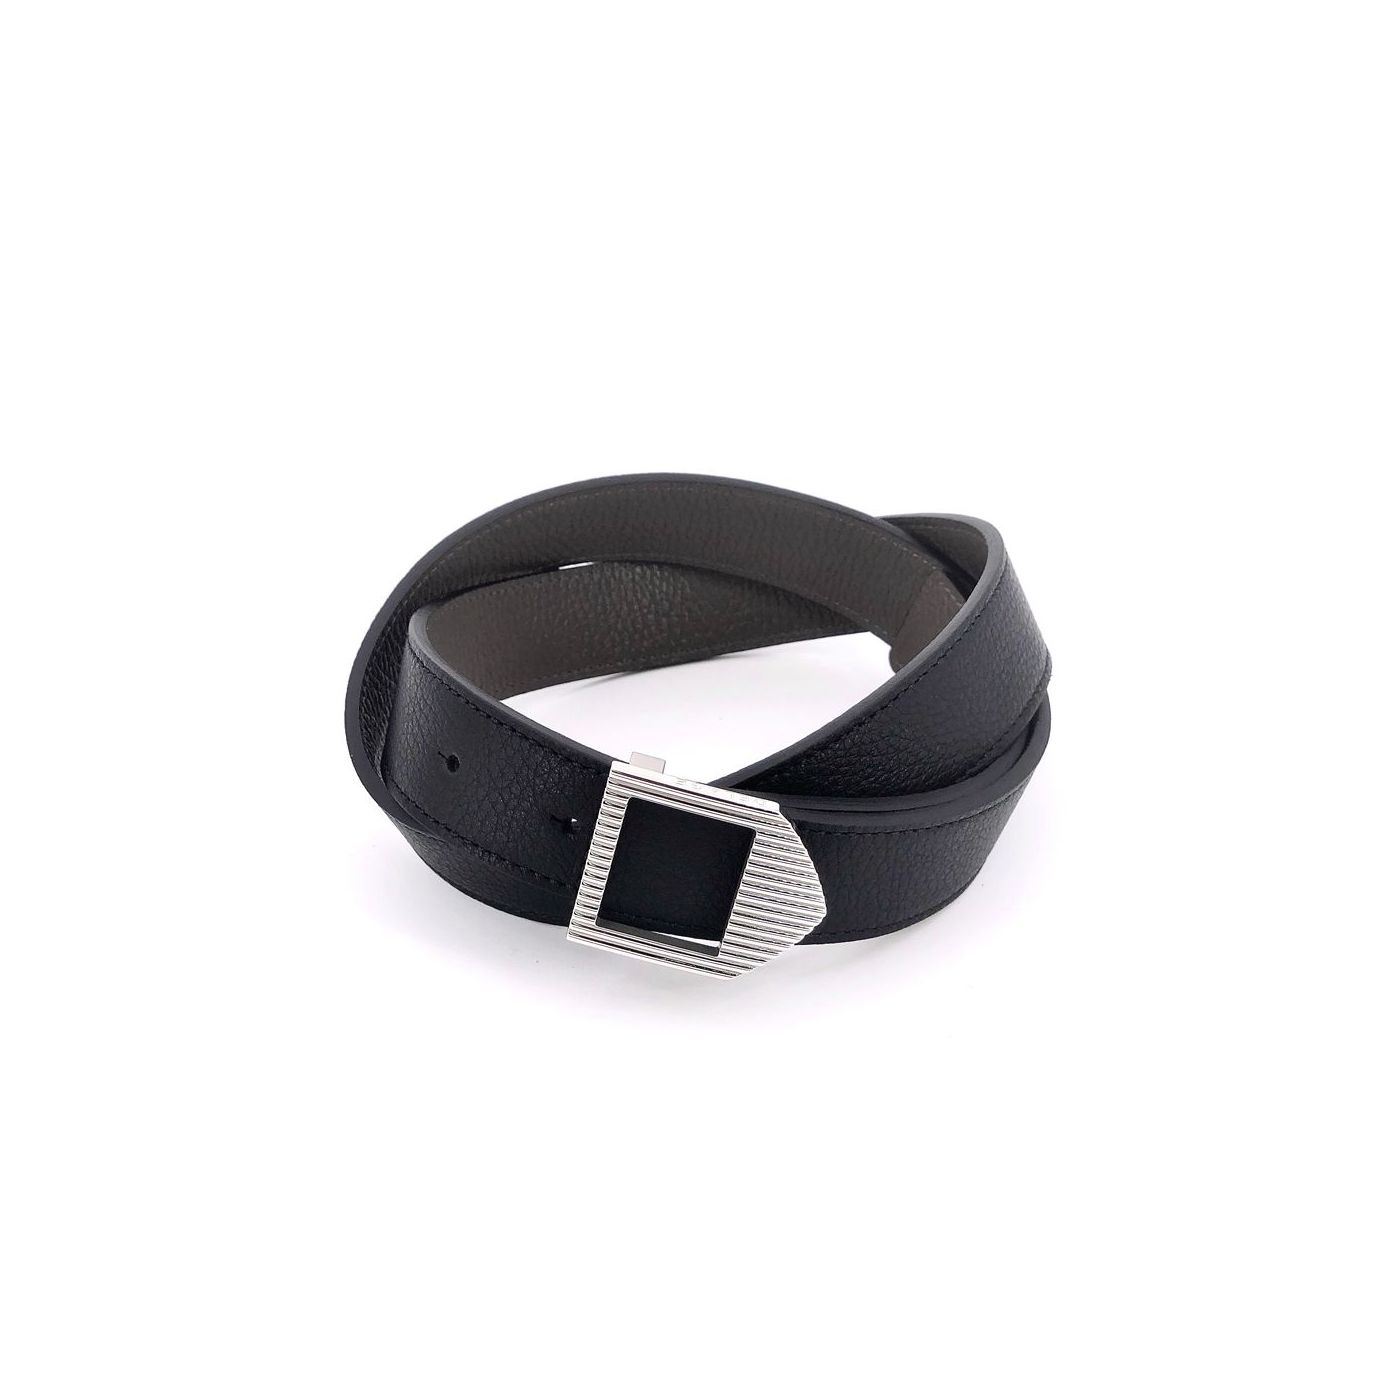 Reversible leather belt black & grey / silver buckle